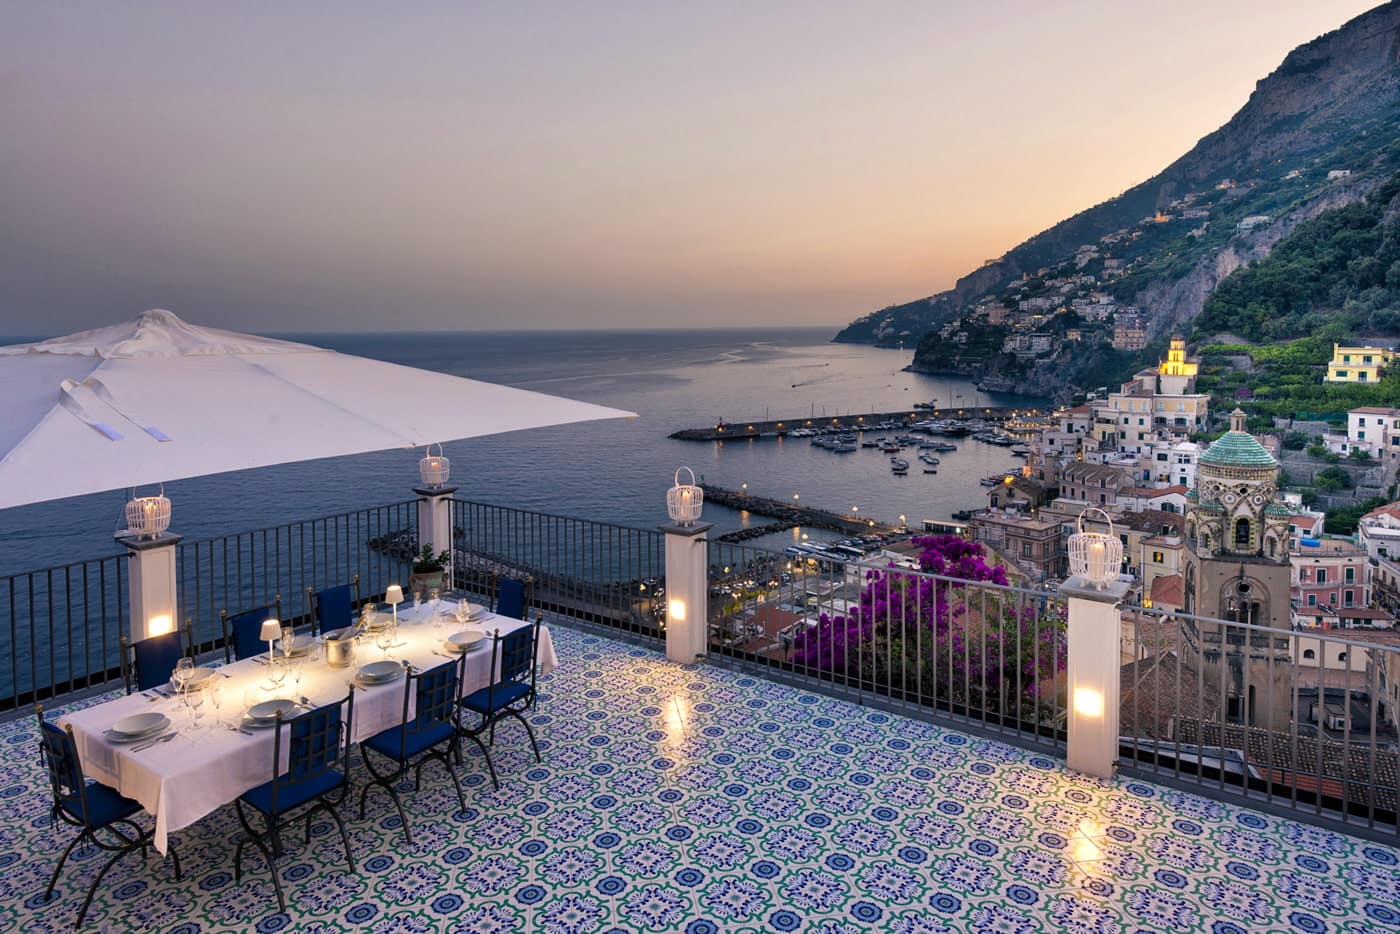 The most beautiful villa on the Amalfi Coast